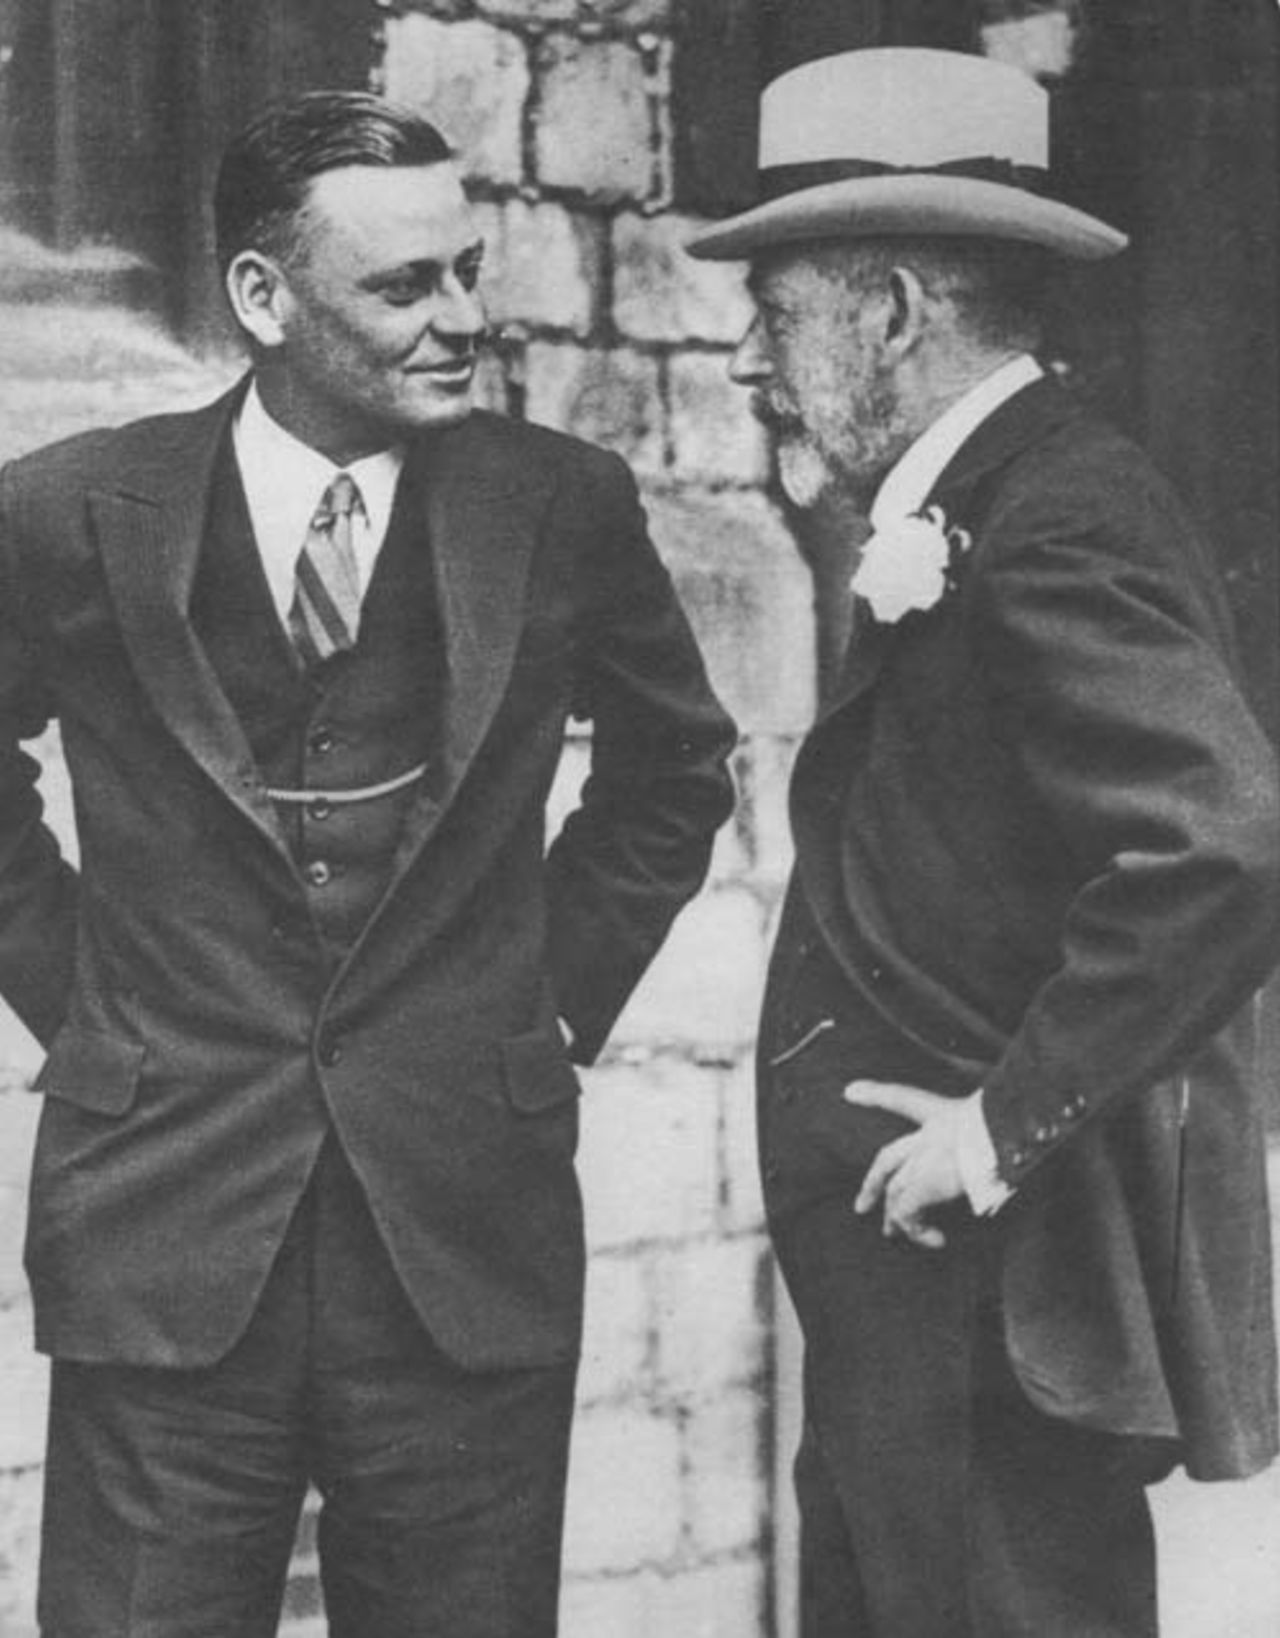 Bill Woodfull meets King George V, 1934